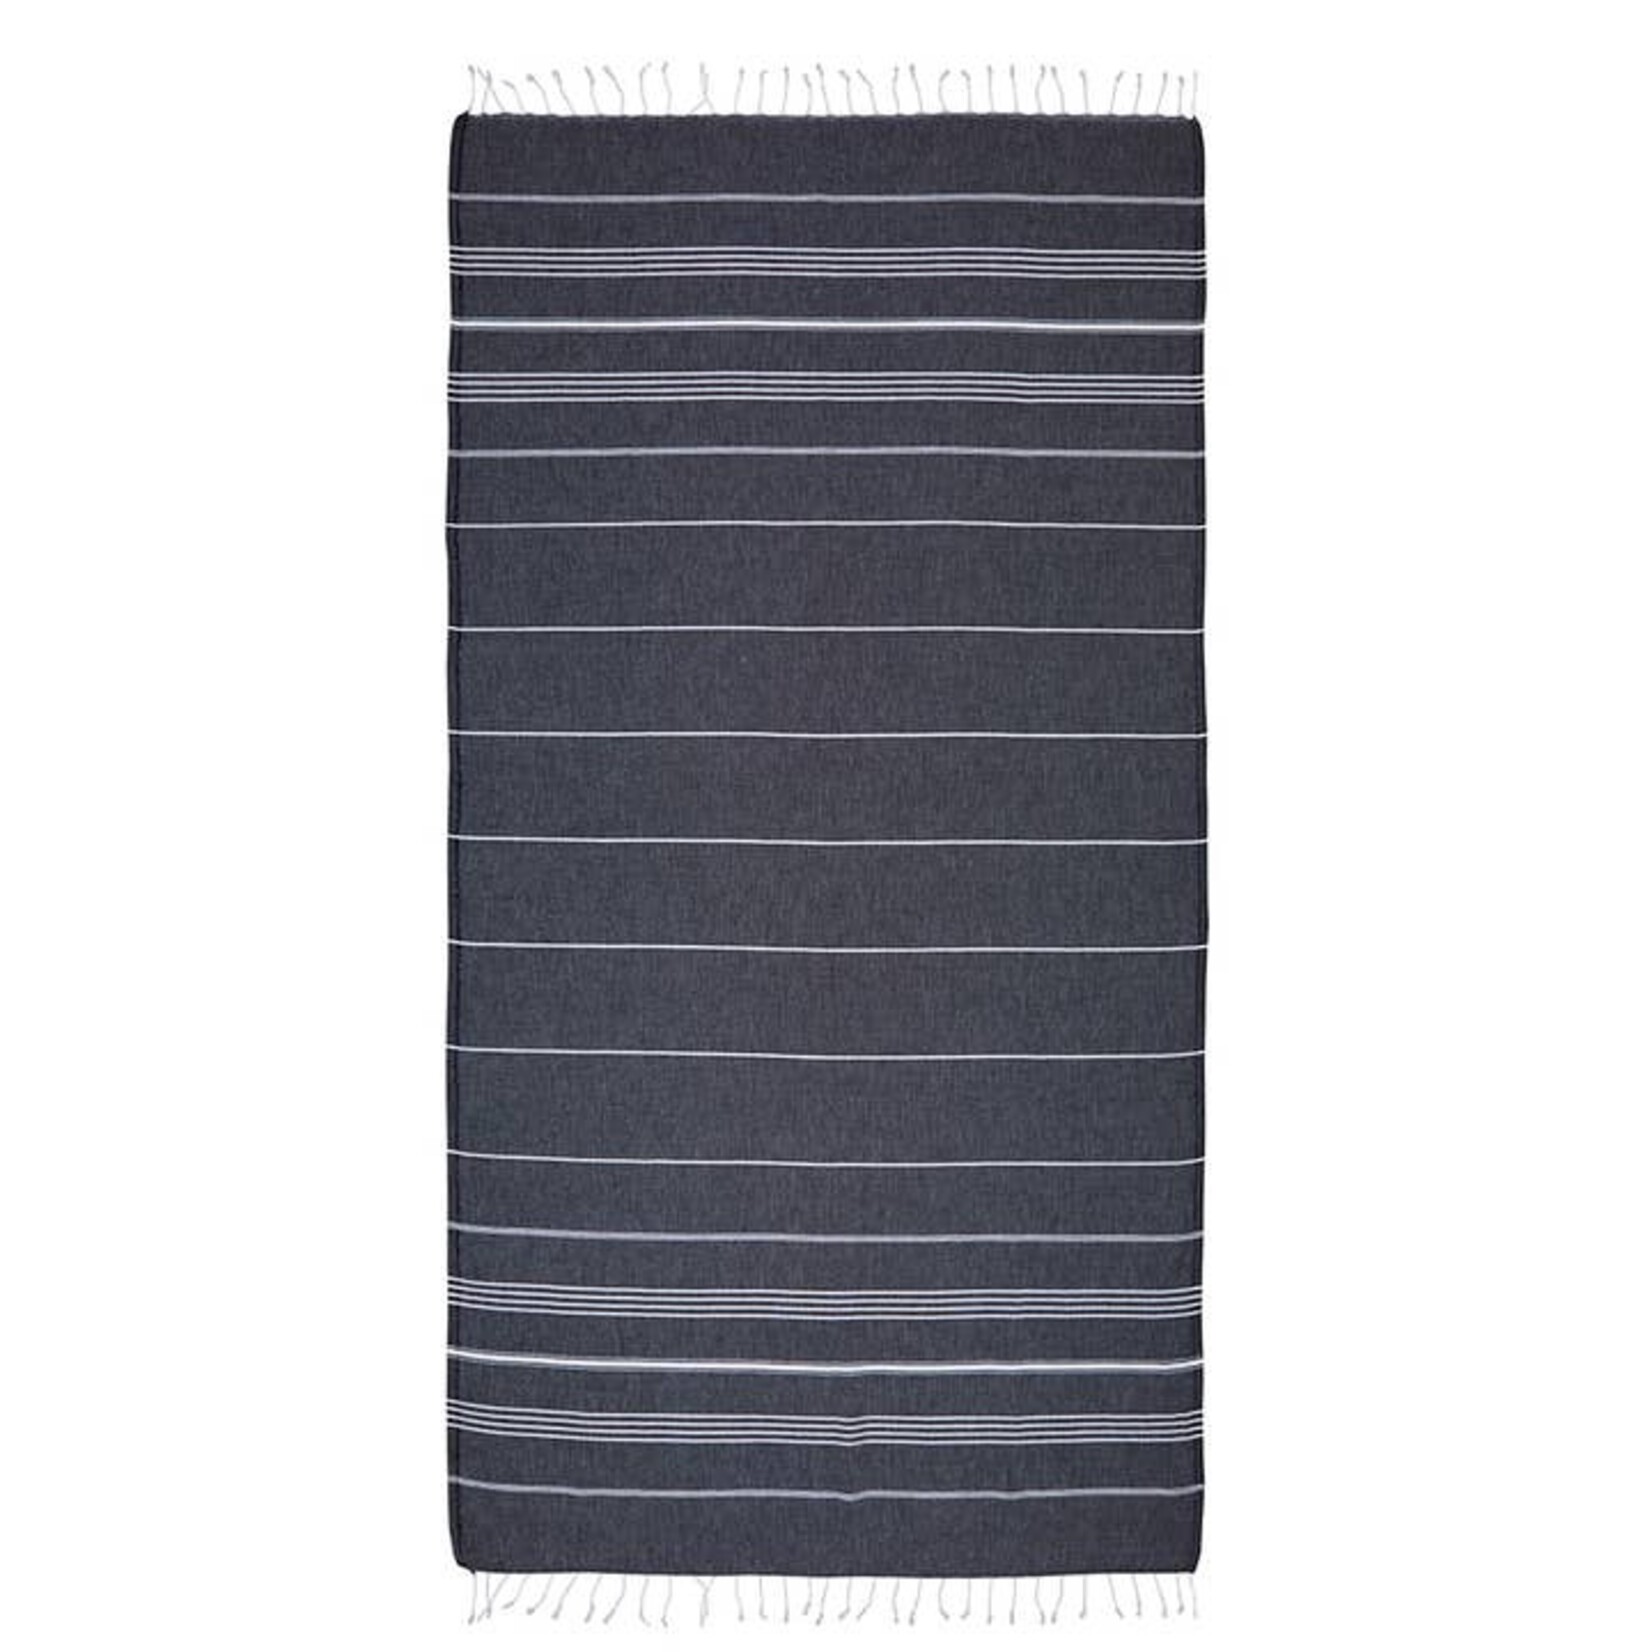 Turkish Towel - Black Stripe